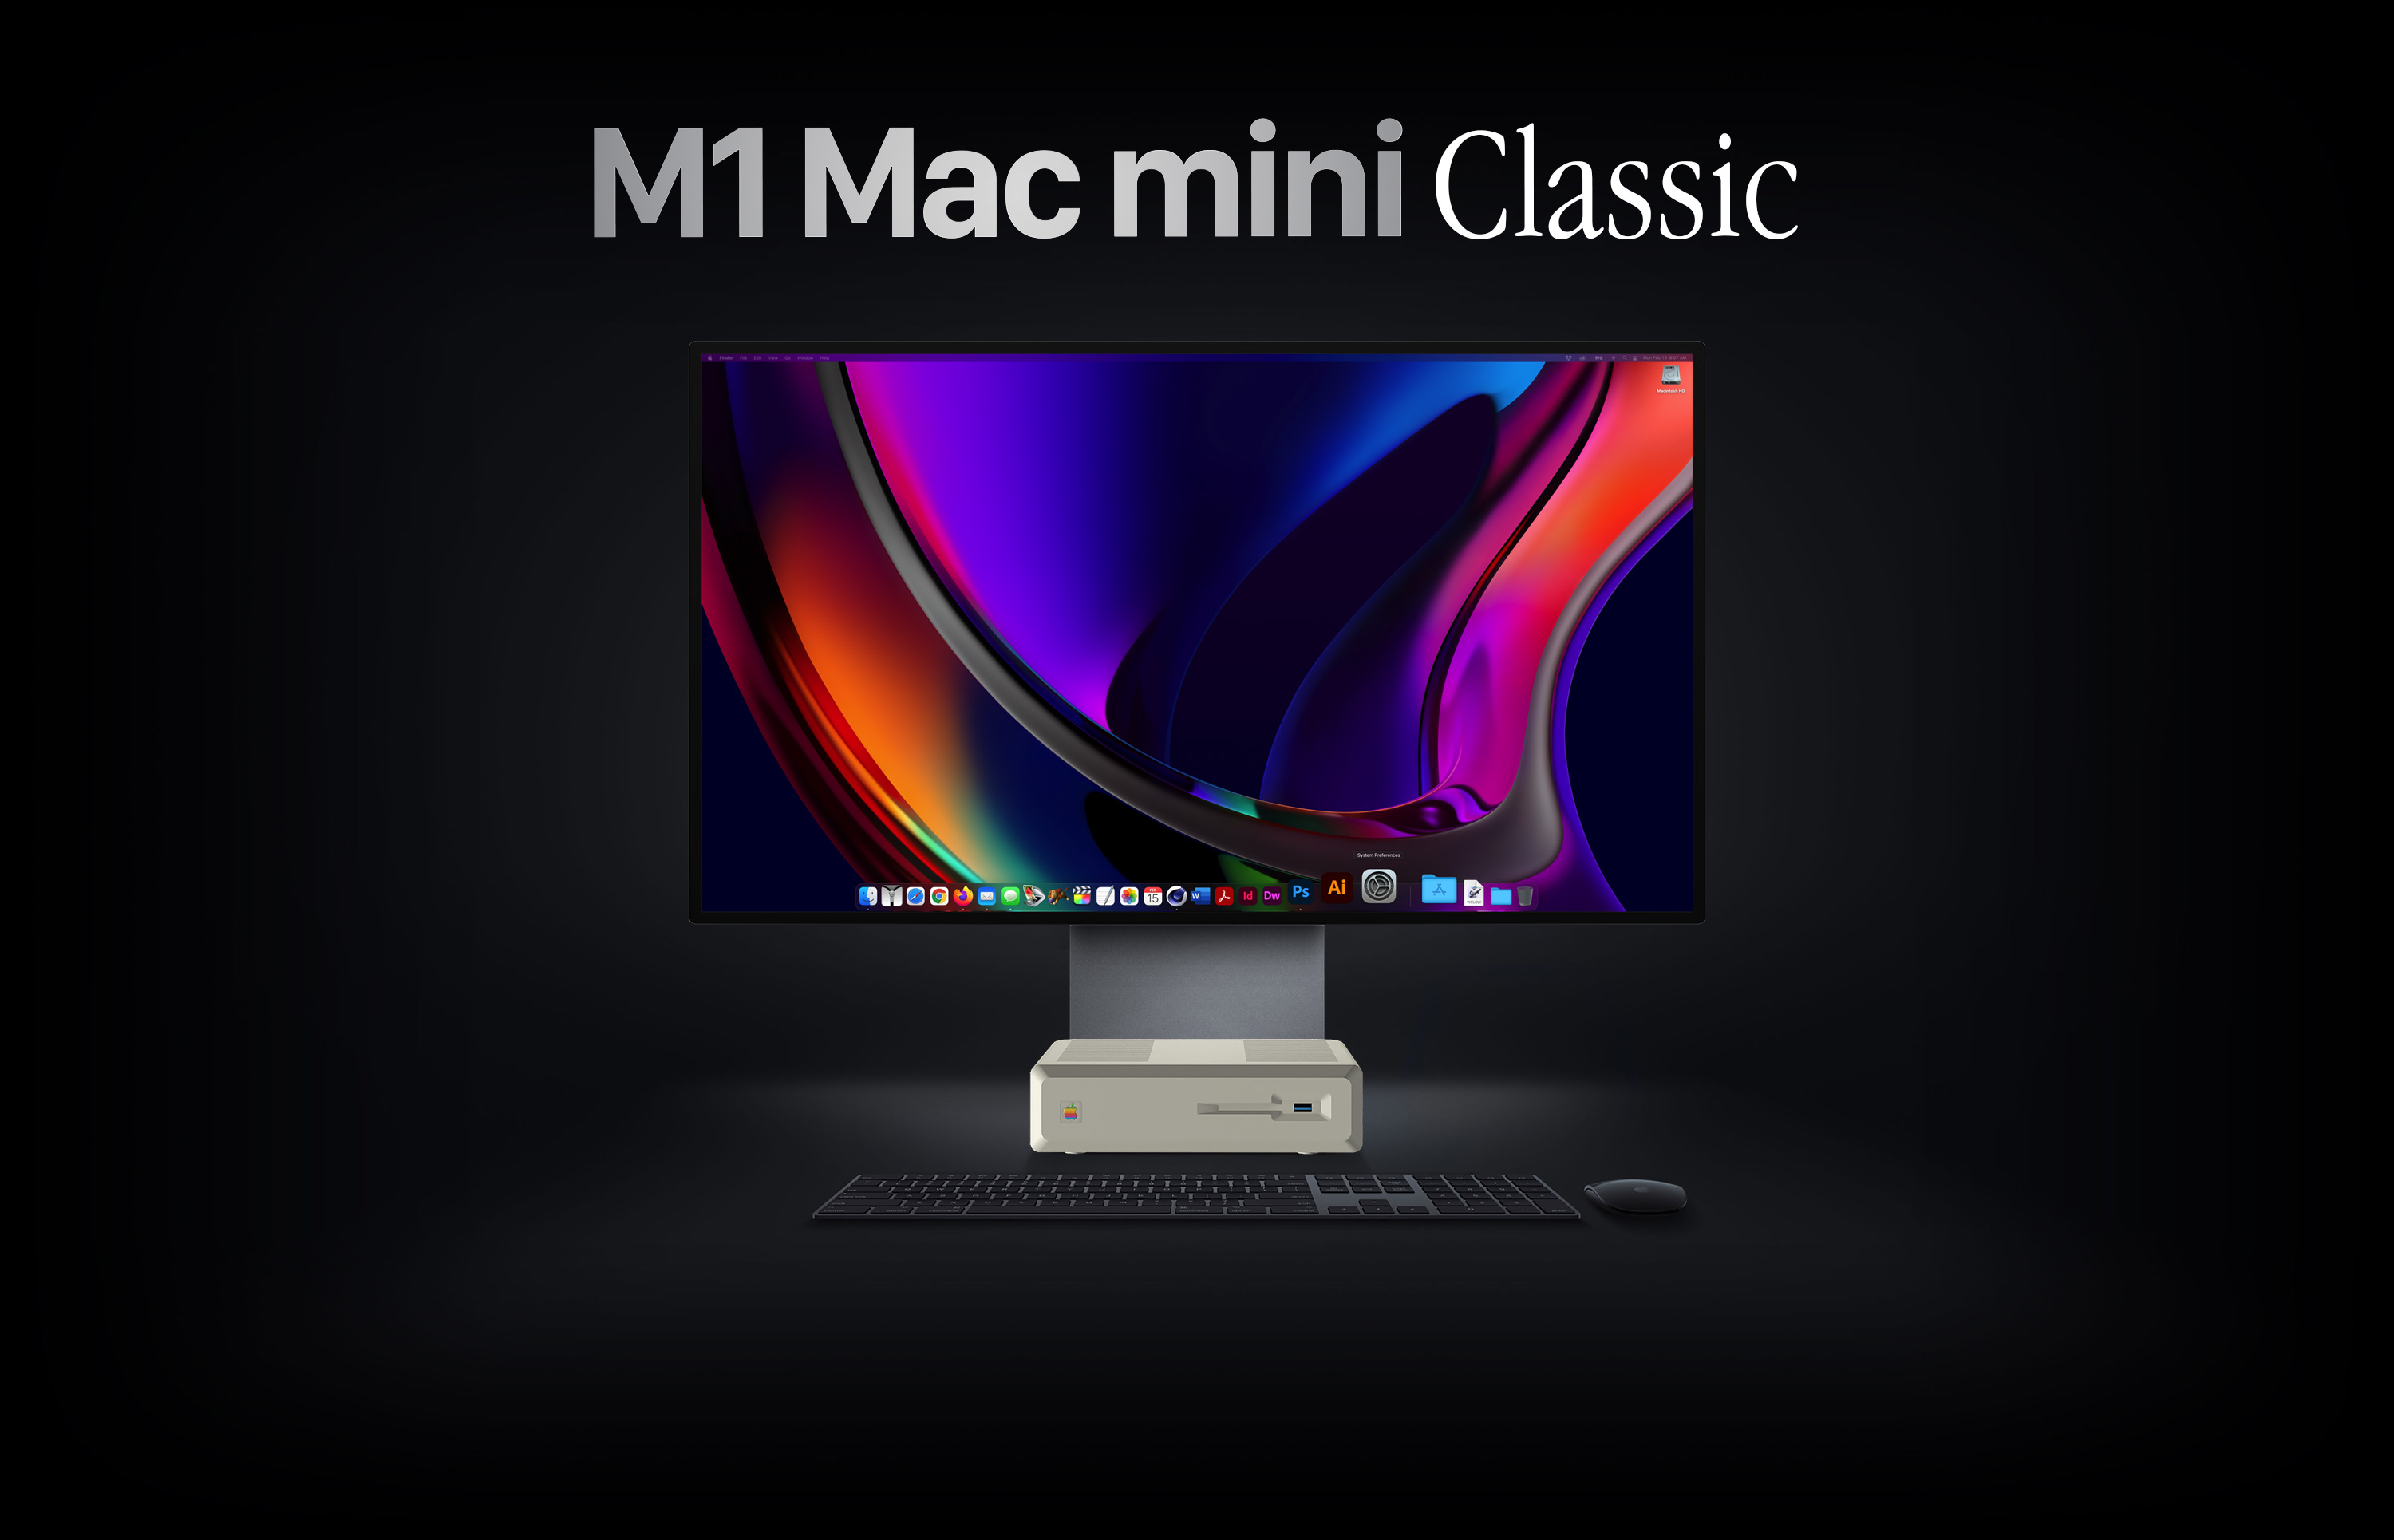 M1 Mac mini Classic front view